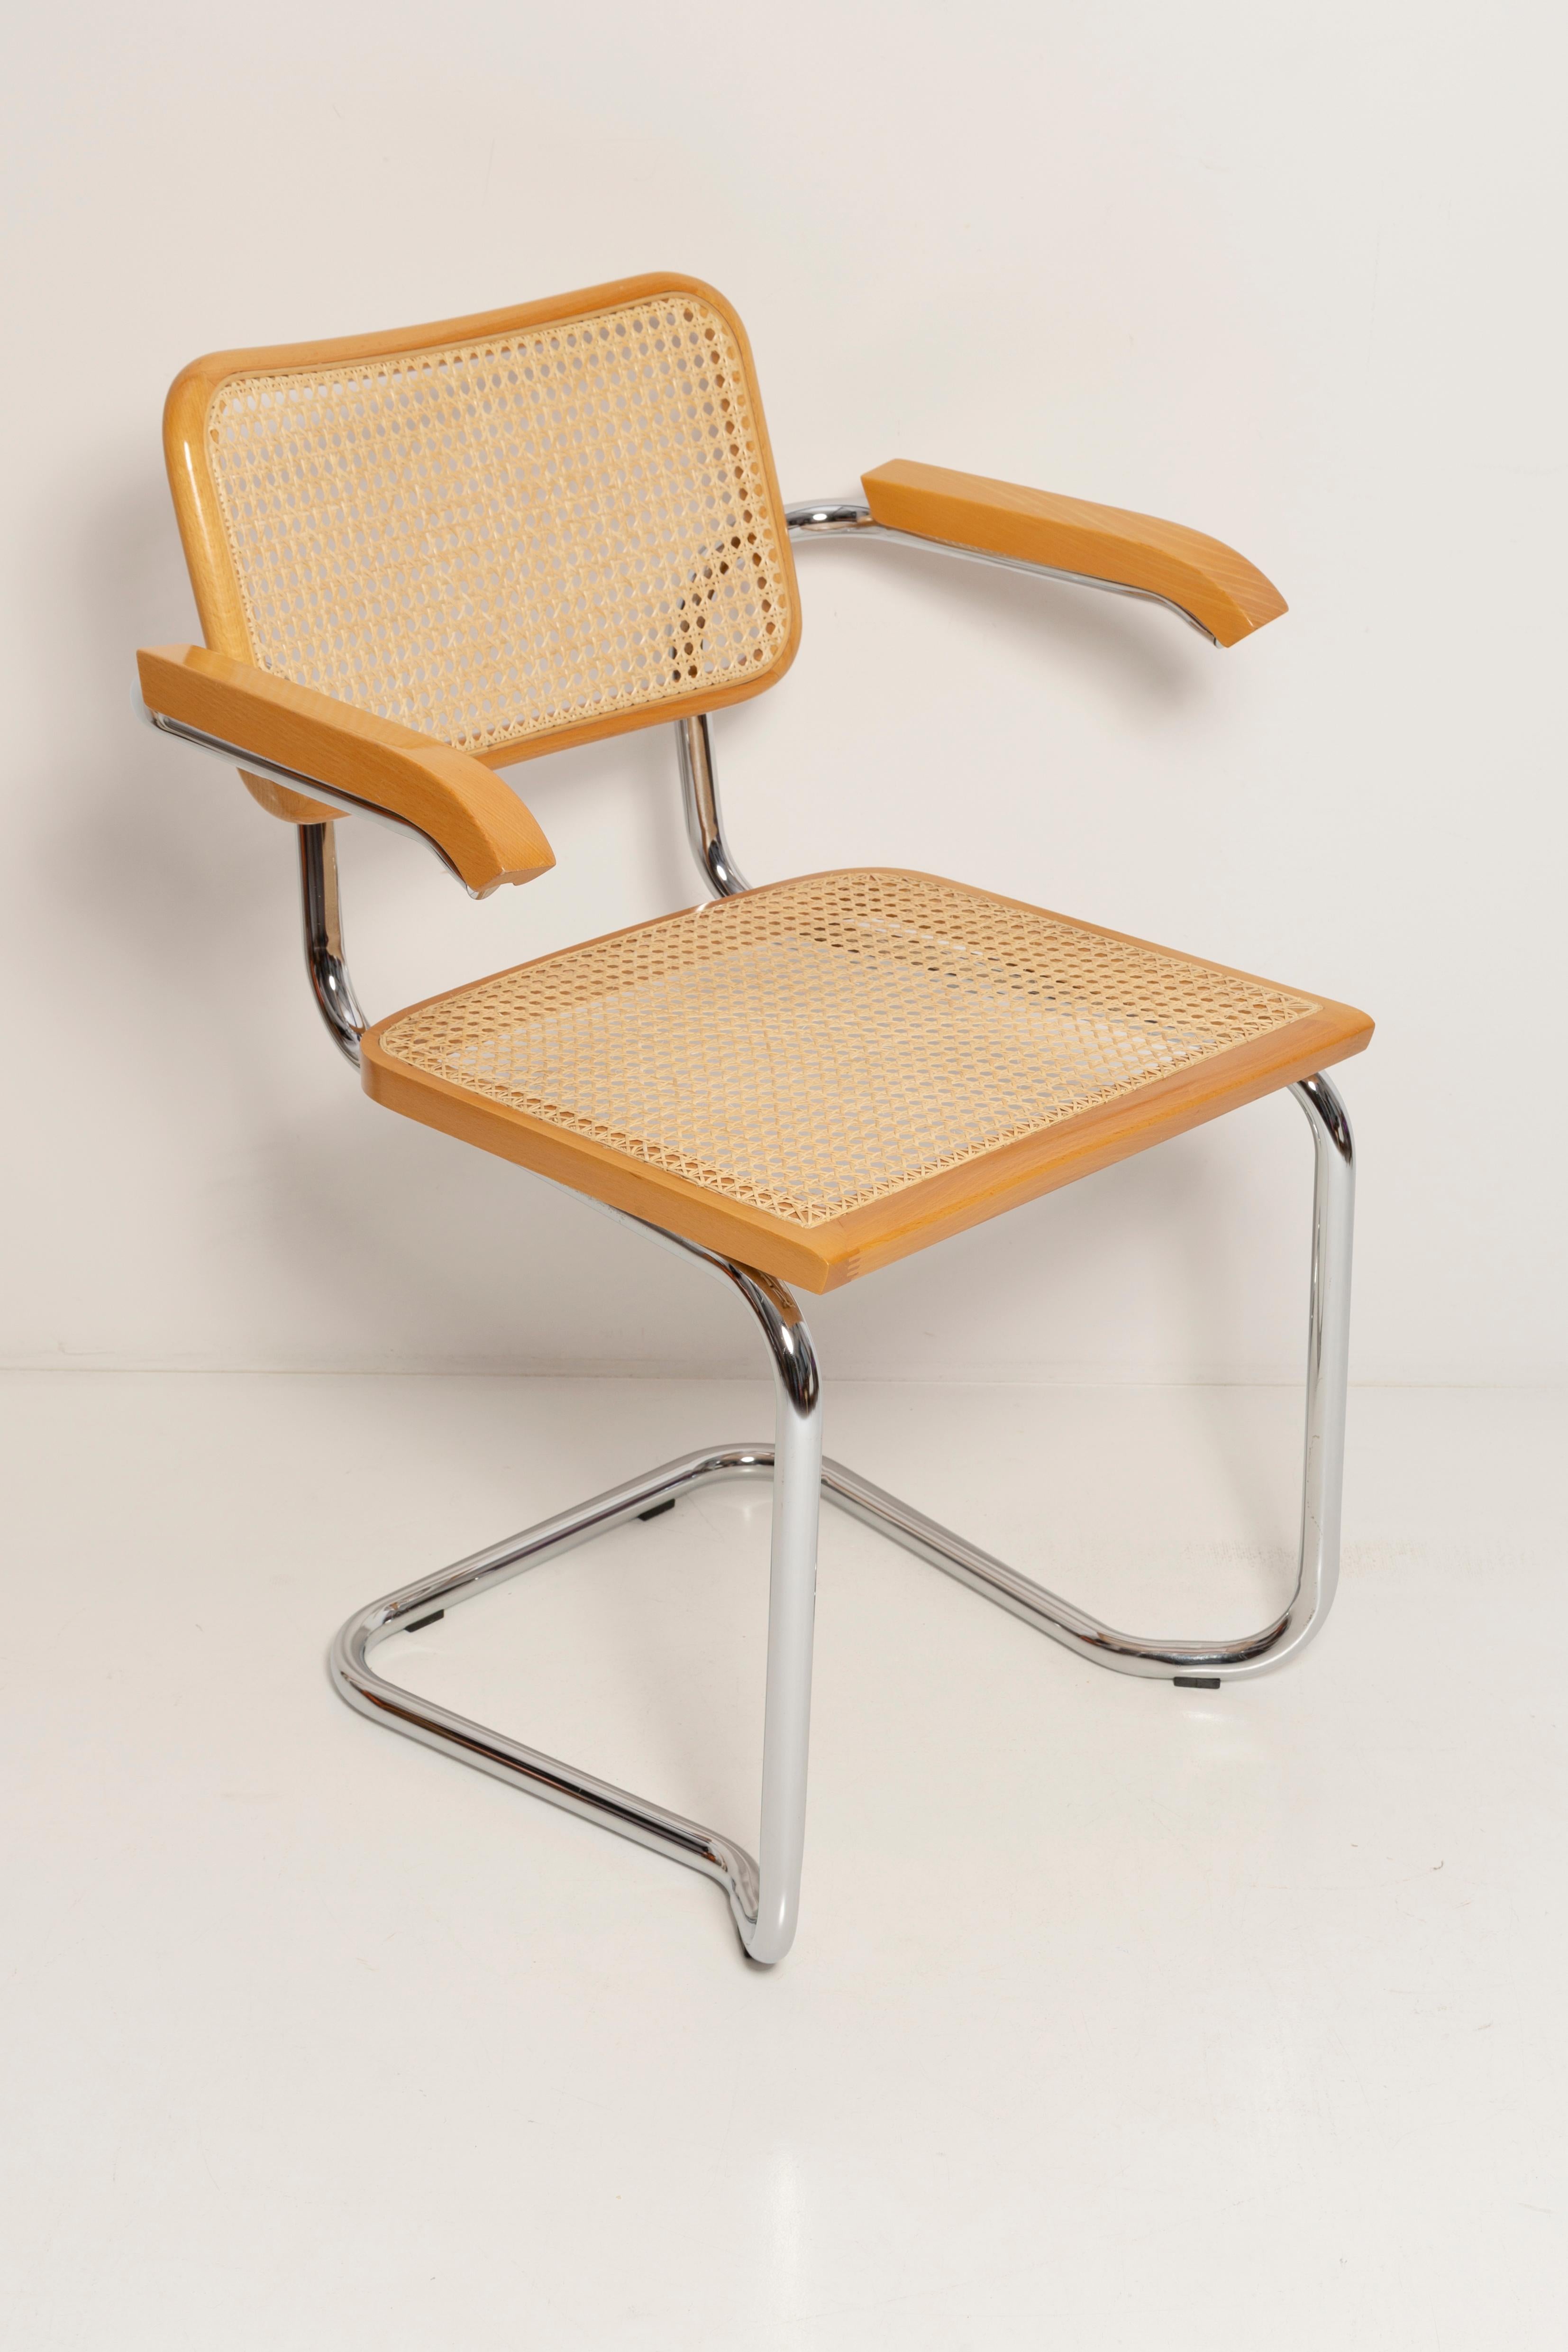 Italian Midcentury Cesca Rattan Chair, Marcel Breuer, Italy, 1960s For Sale